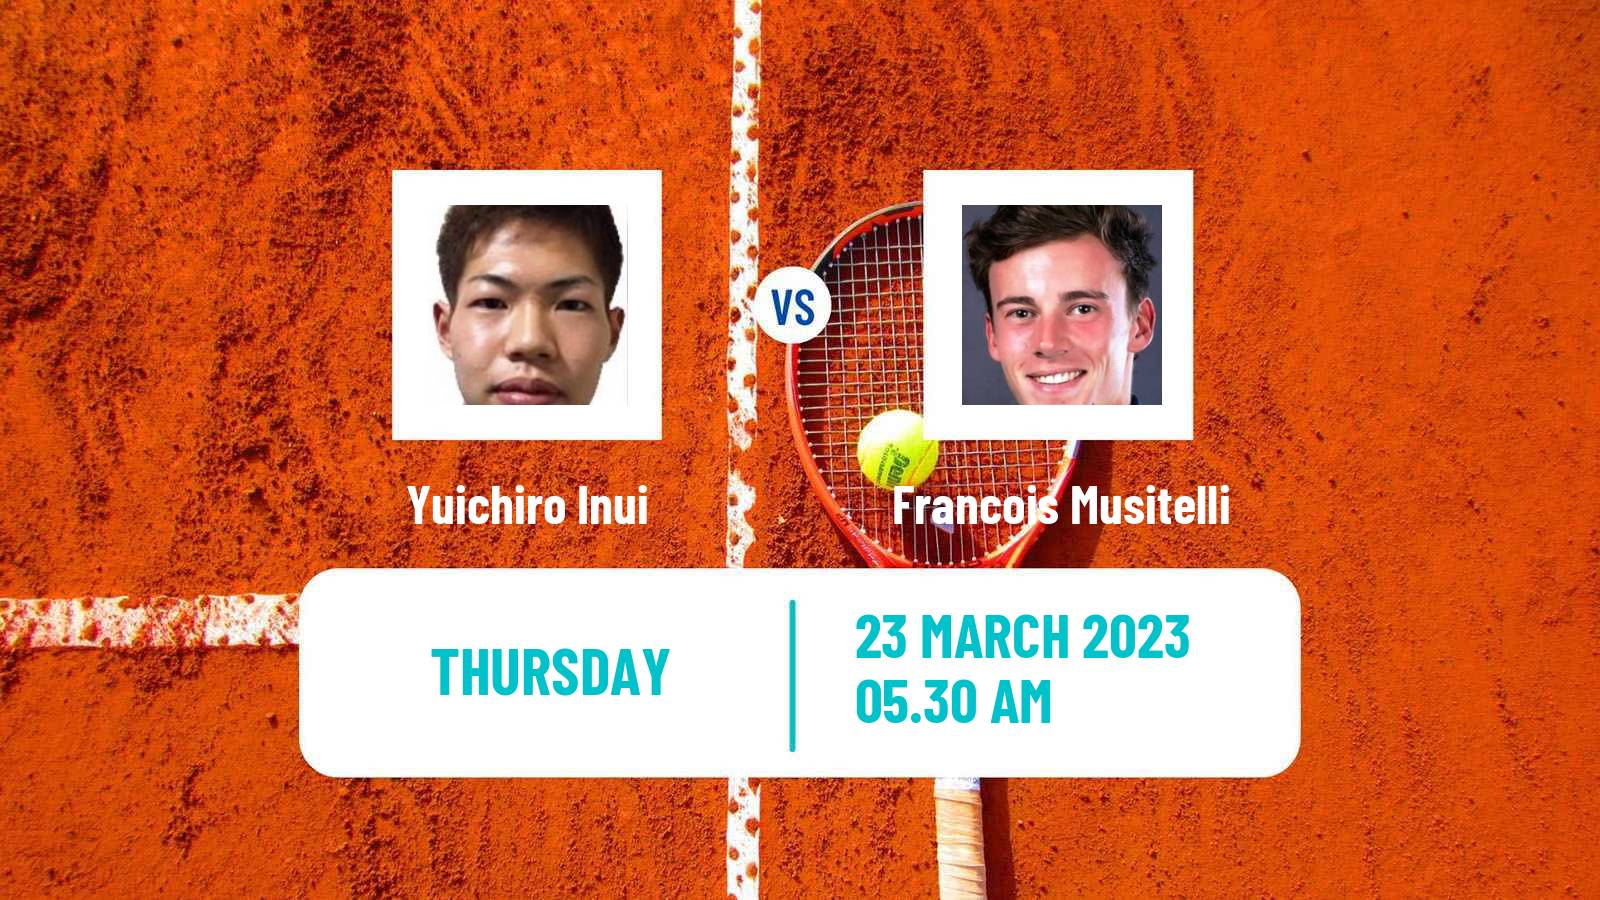 Tennis ITF Tournaments Yuichiro Inui - Francois Musitelli